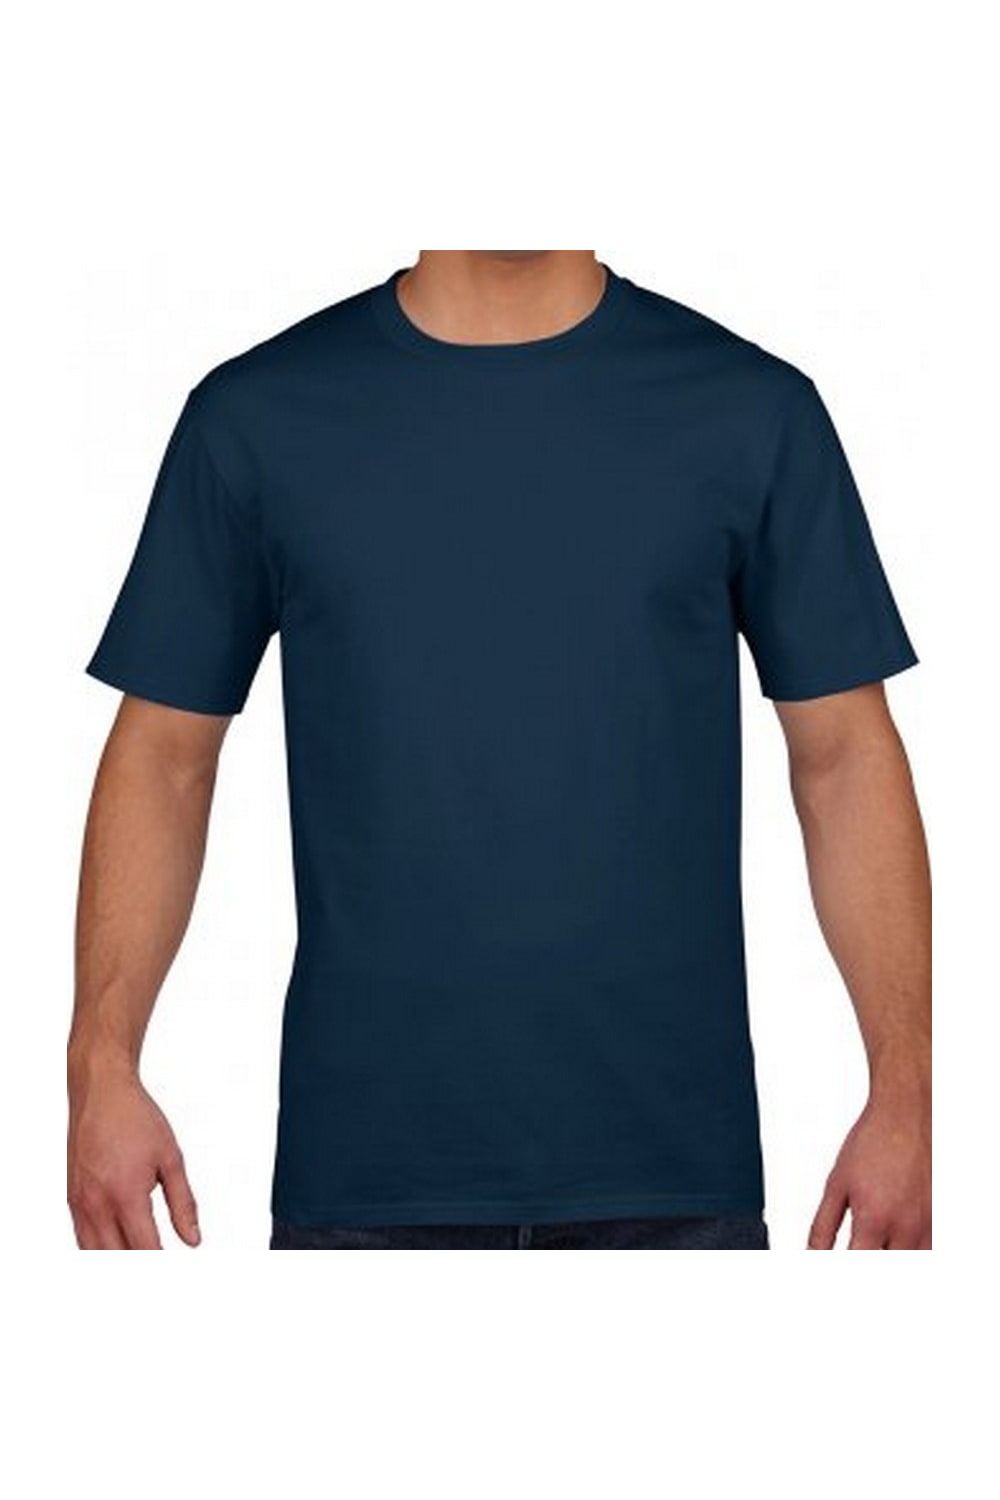 Gildan Mens Premium Cotton T-Shirt (Navy)